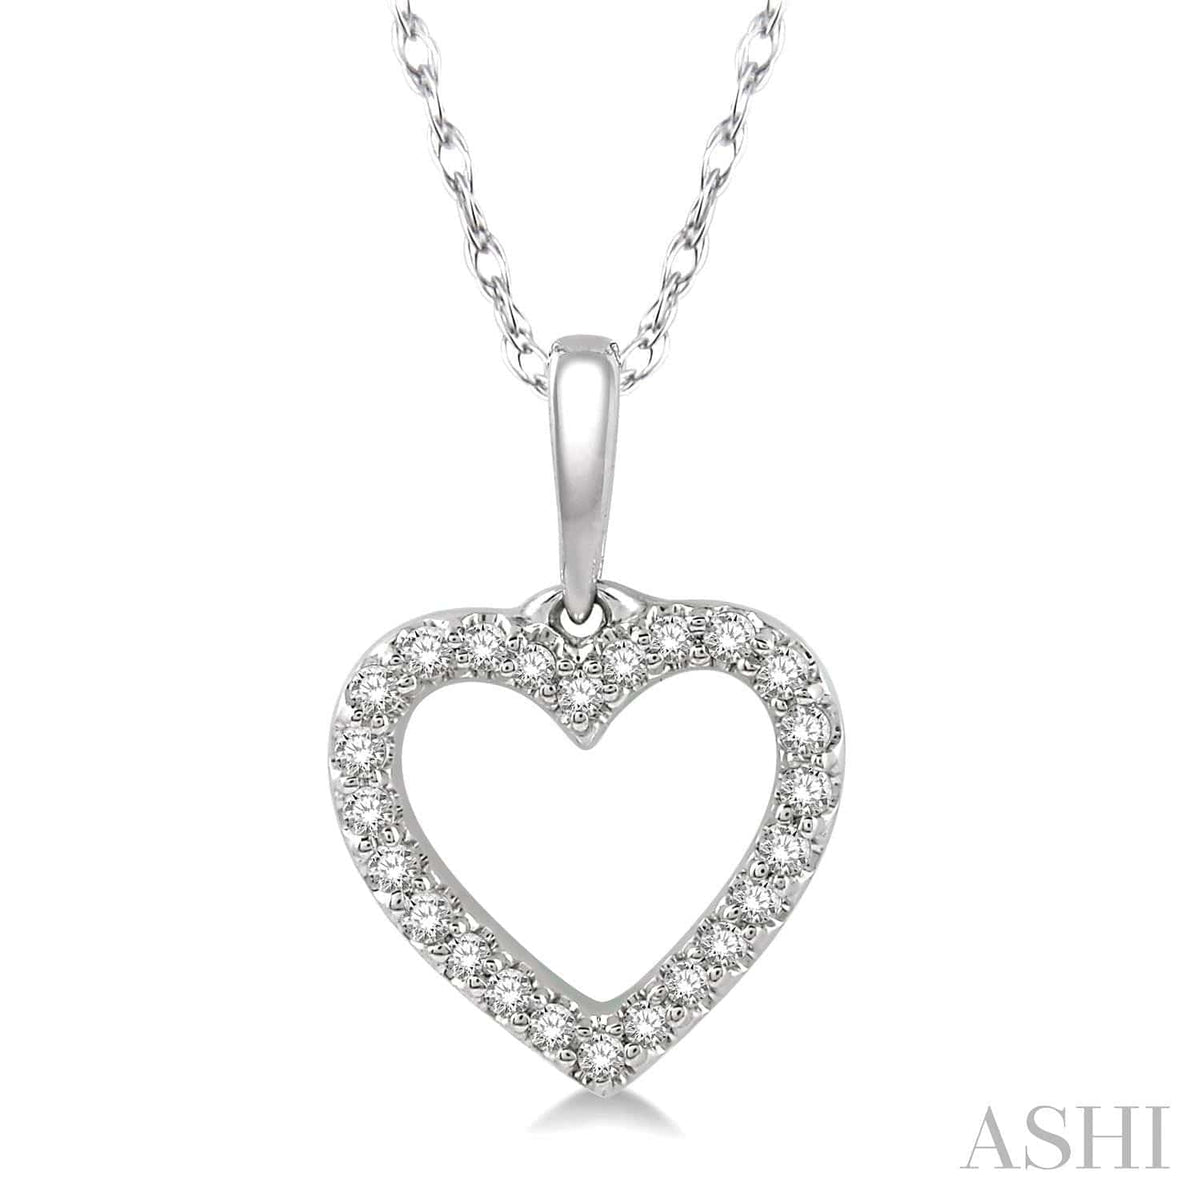 Ashi Necklaces and Pendants Heart Shape Petite Diamond Fashion Pendant